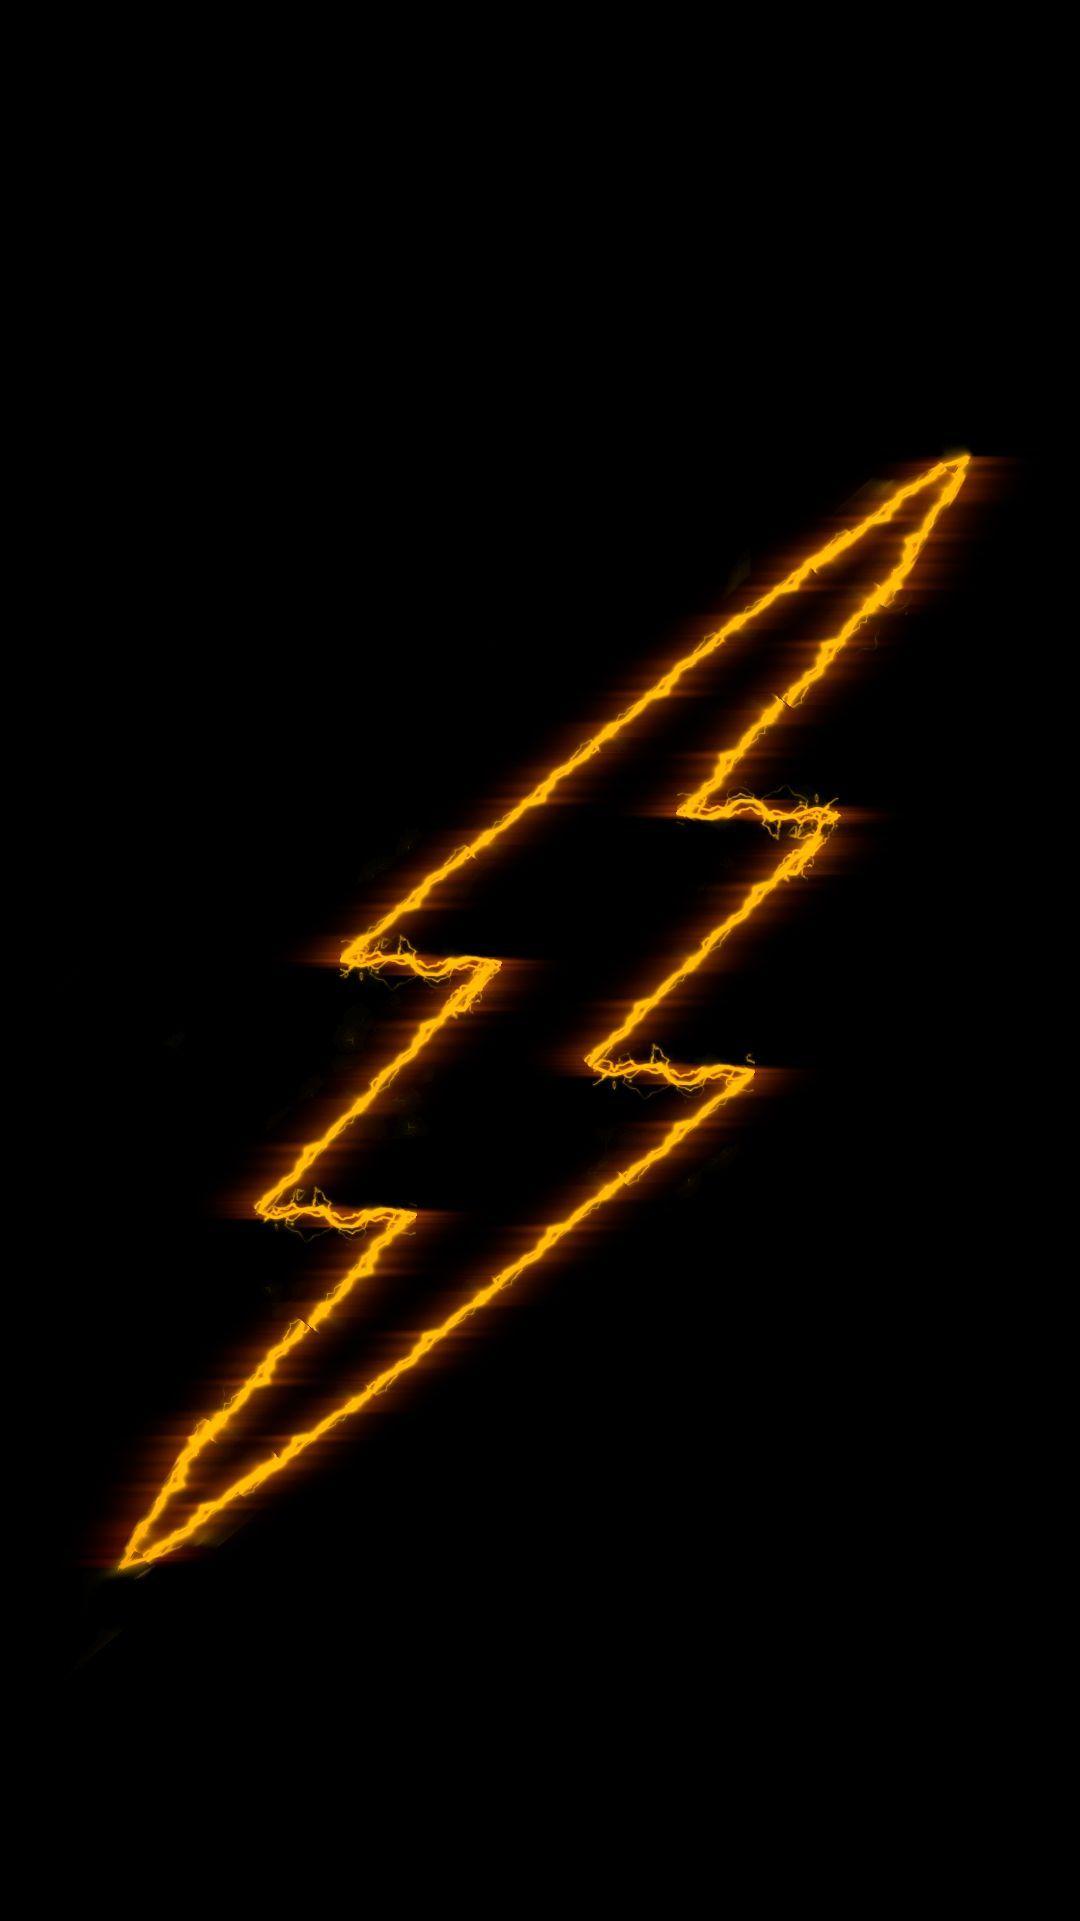 The Flash Logo Wallpaper Free Custom Made IPhone 6 6S Wallpaper. Use